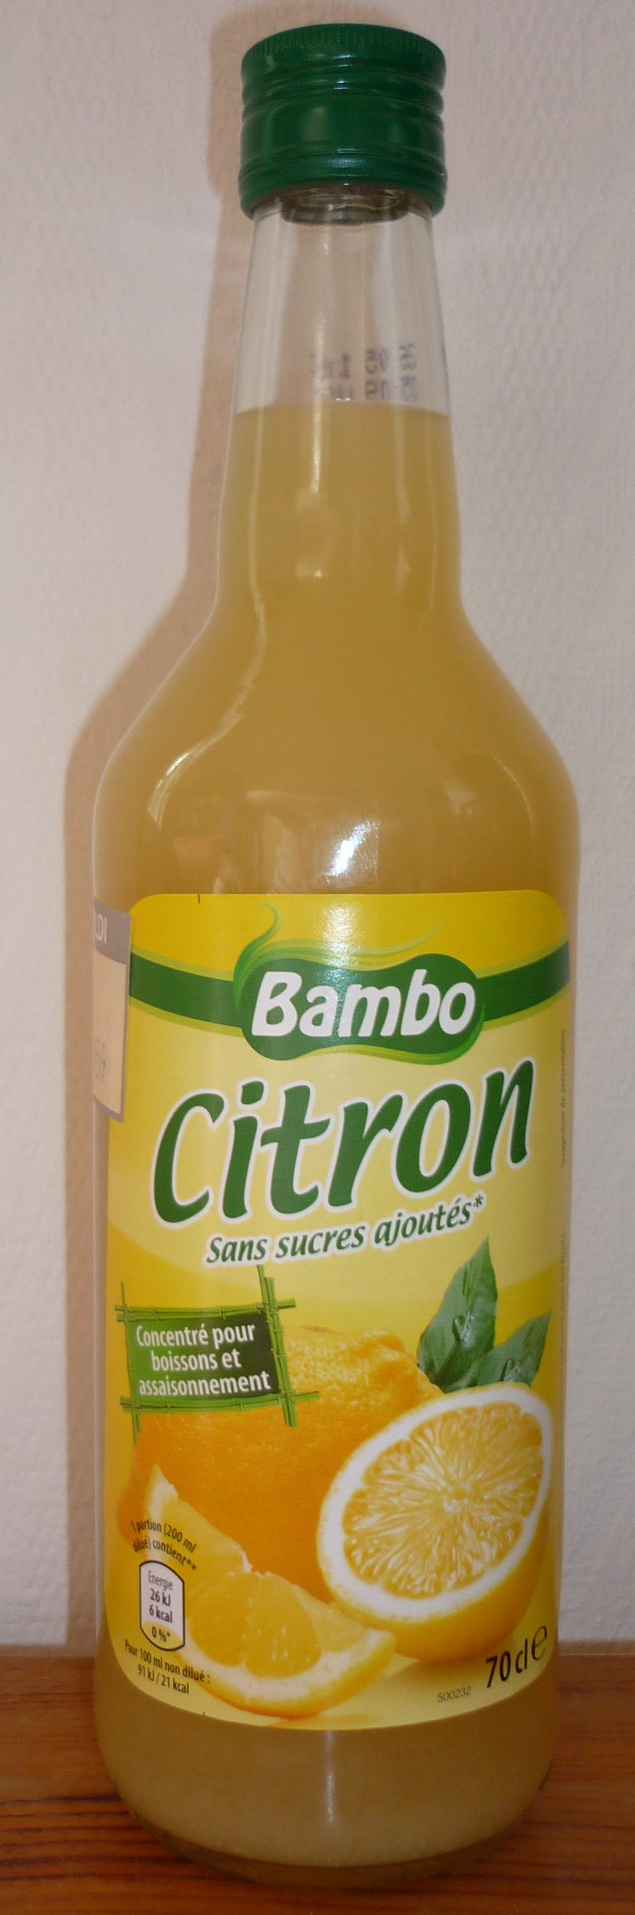 Bambo Citron - Produit